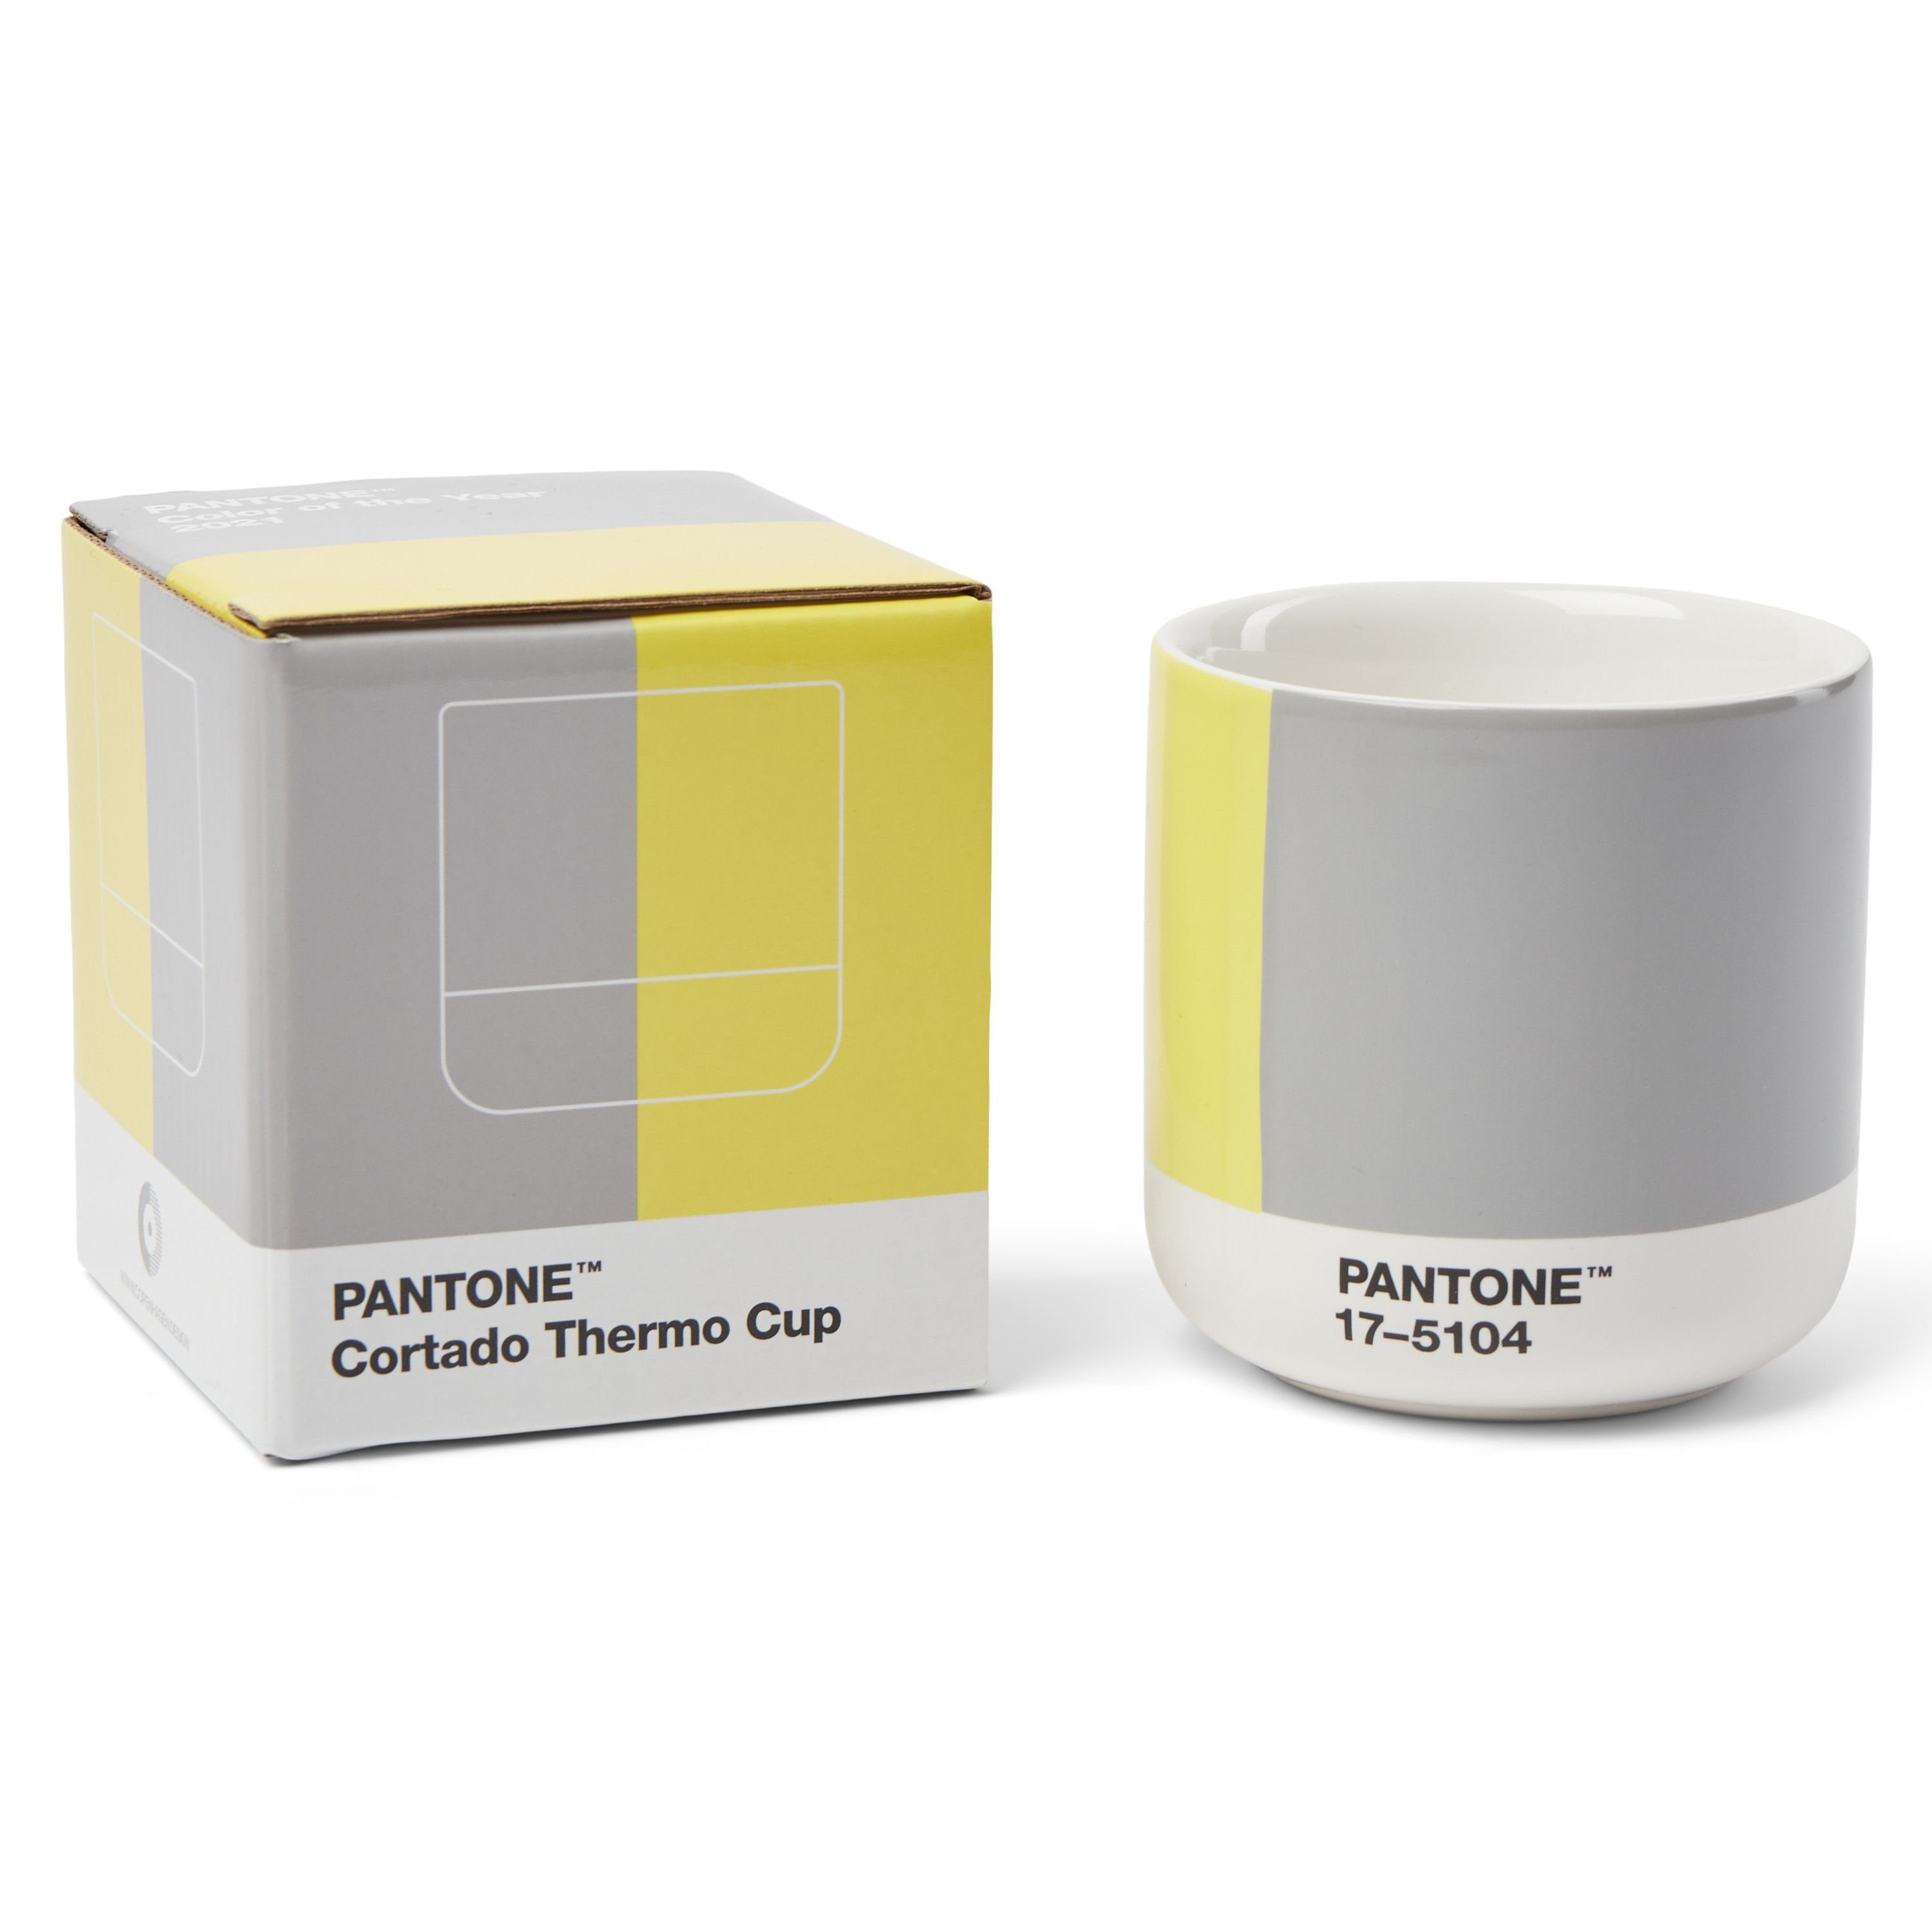 PANTONE Kaffeeservice, Porzellan Thermobecher Ultimate ml, 17-5104 & 13-0647 Illuminating Geschenkbox- Cortado,190 Gray